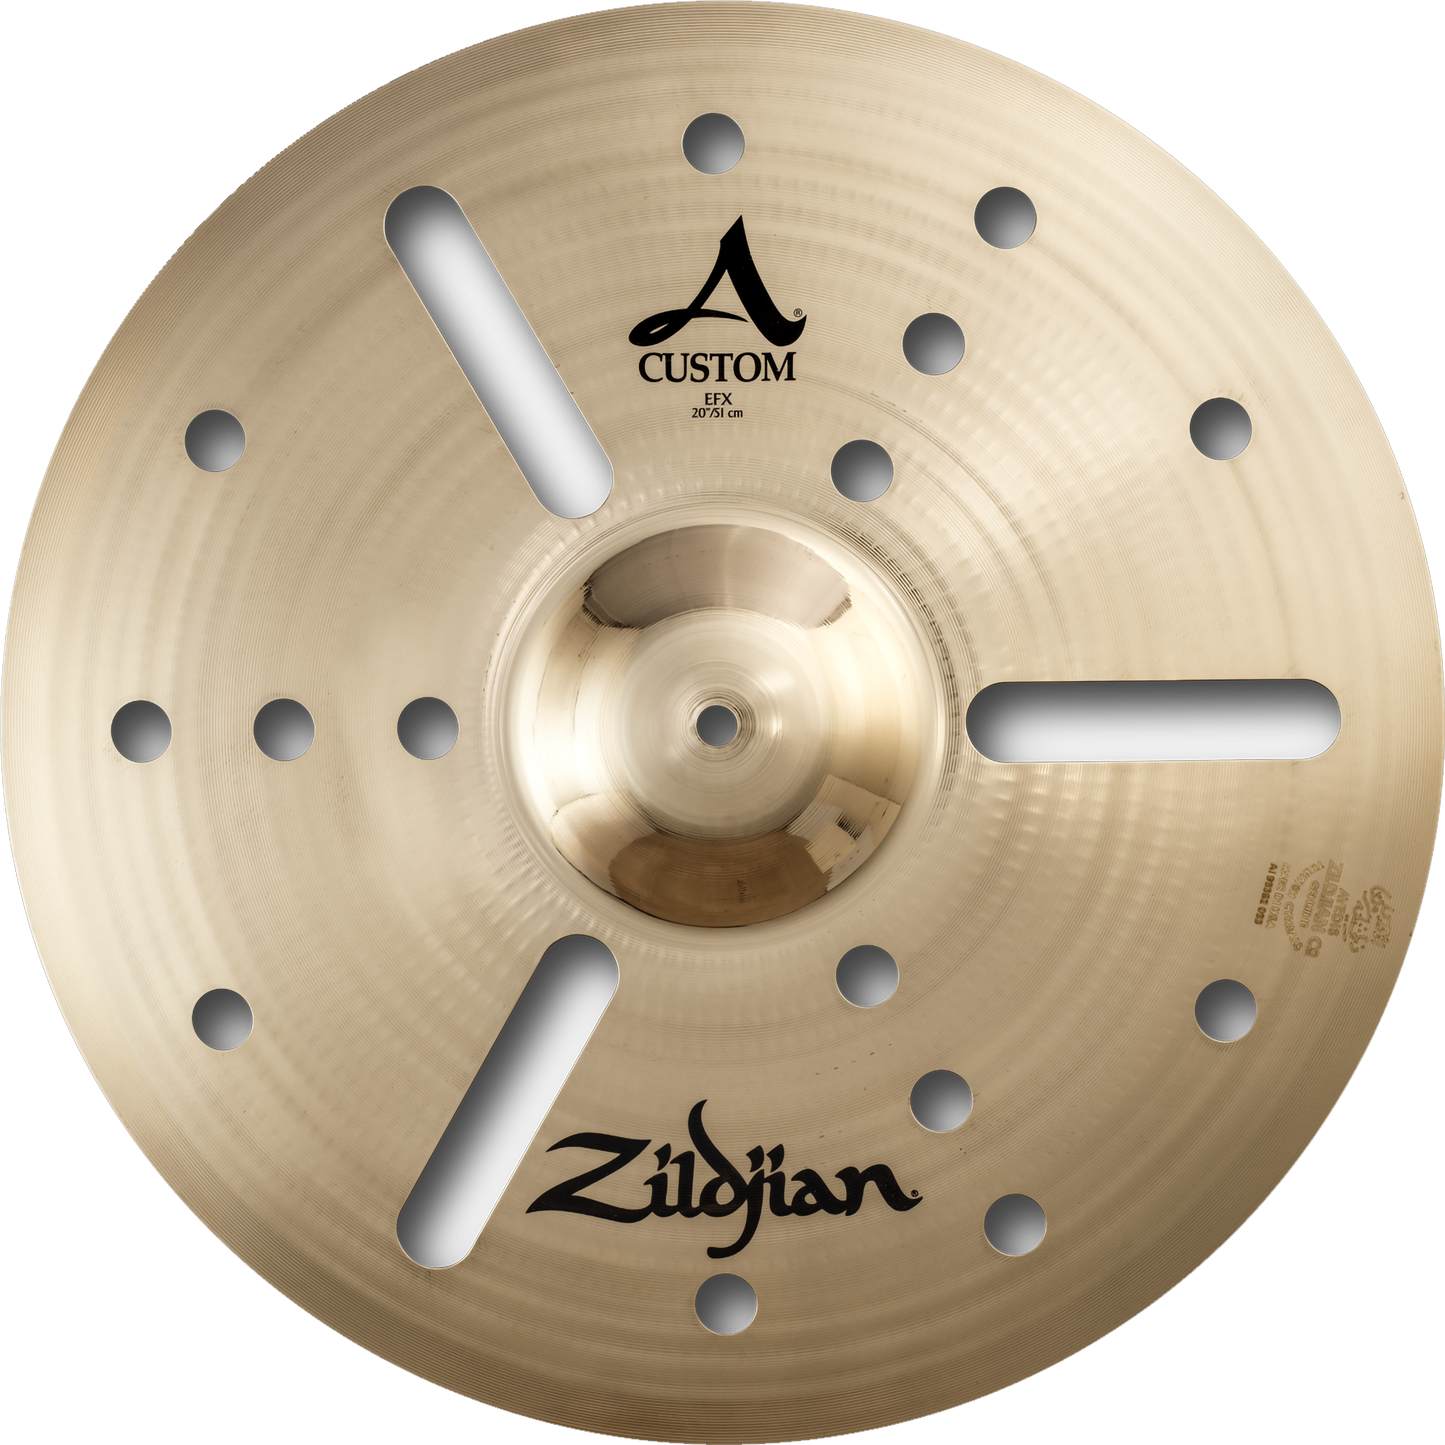 Zildjian 20” A Custom EFX Cymbal